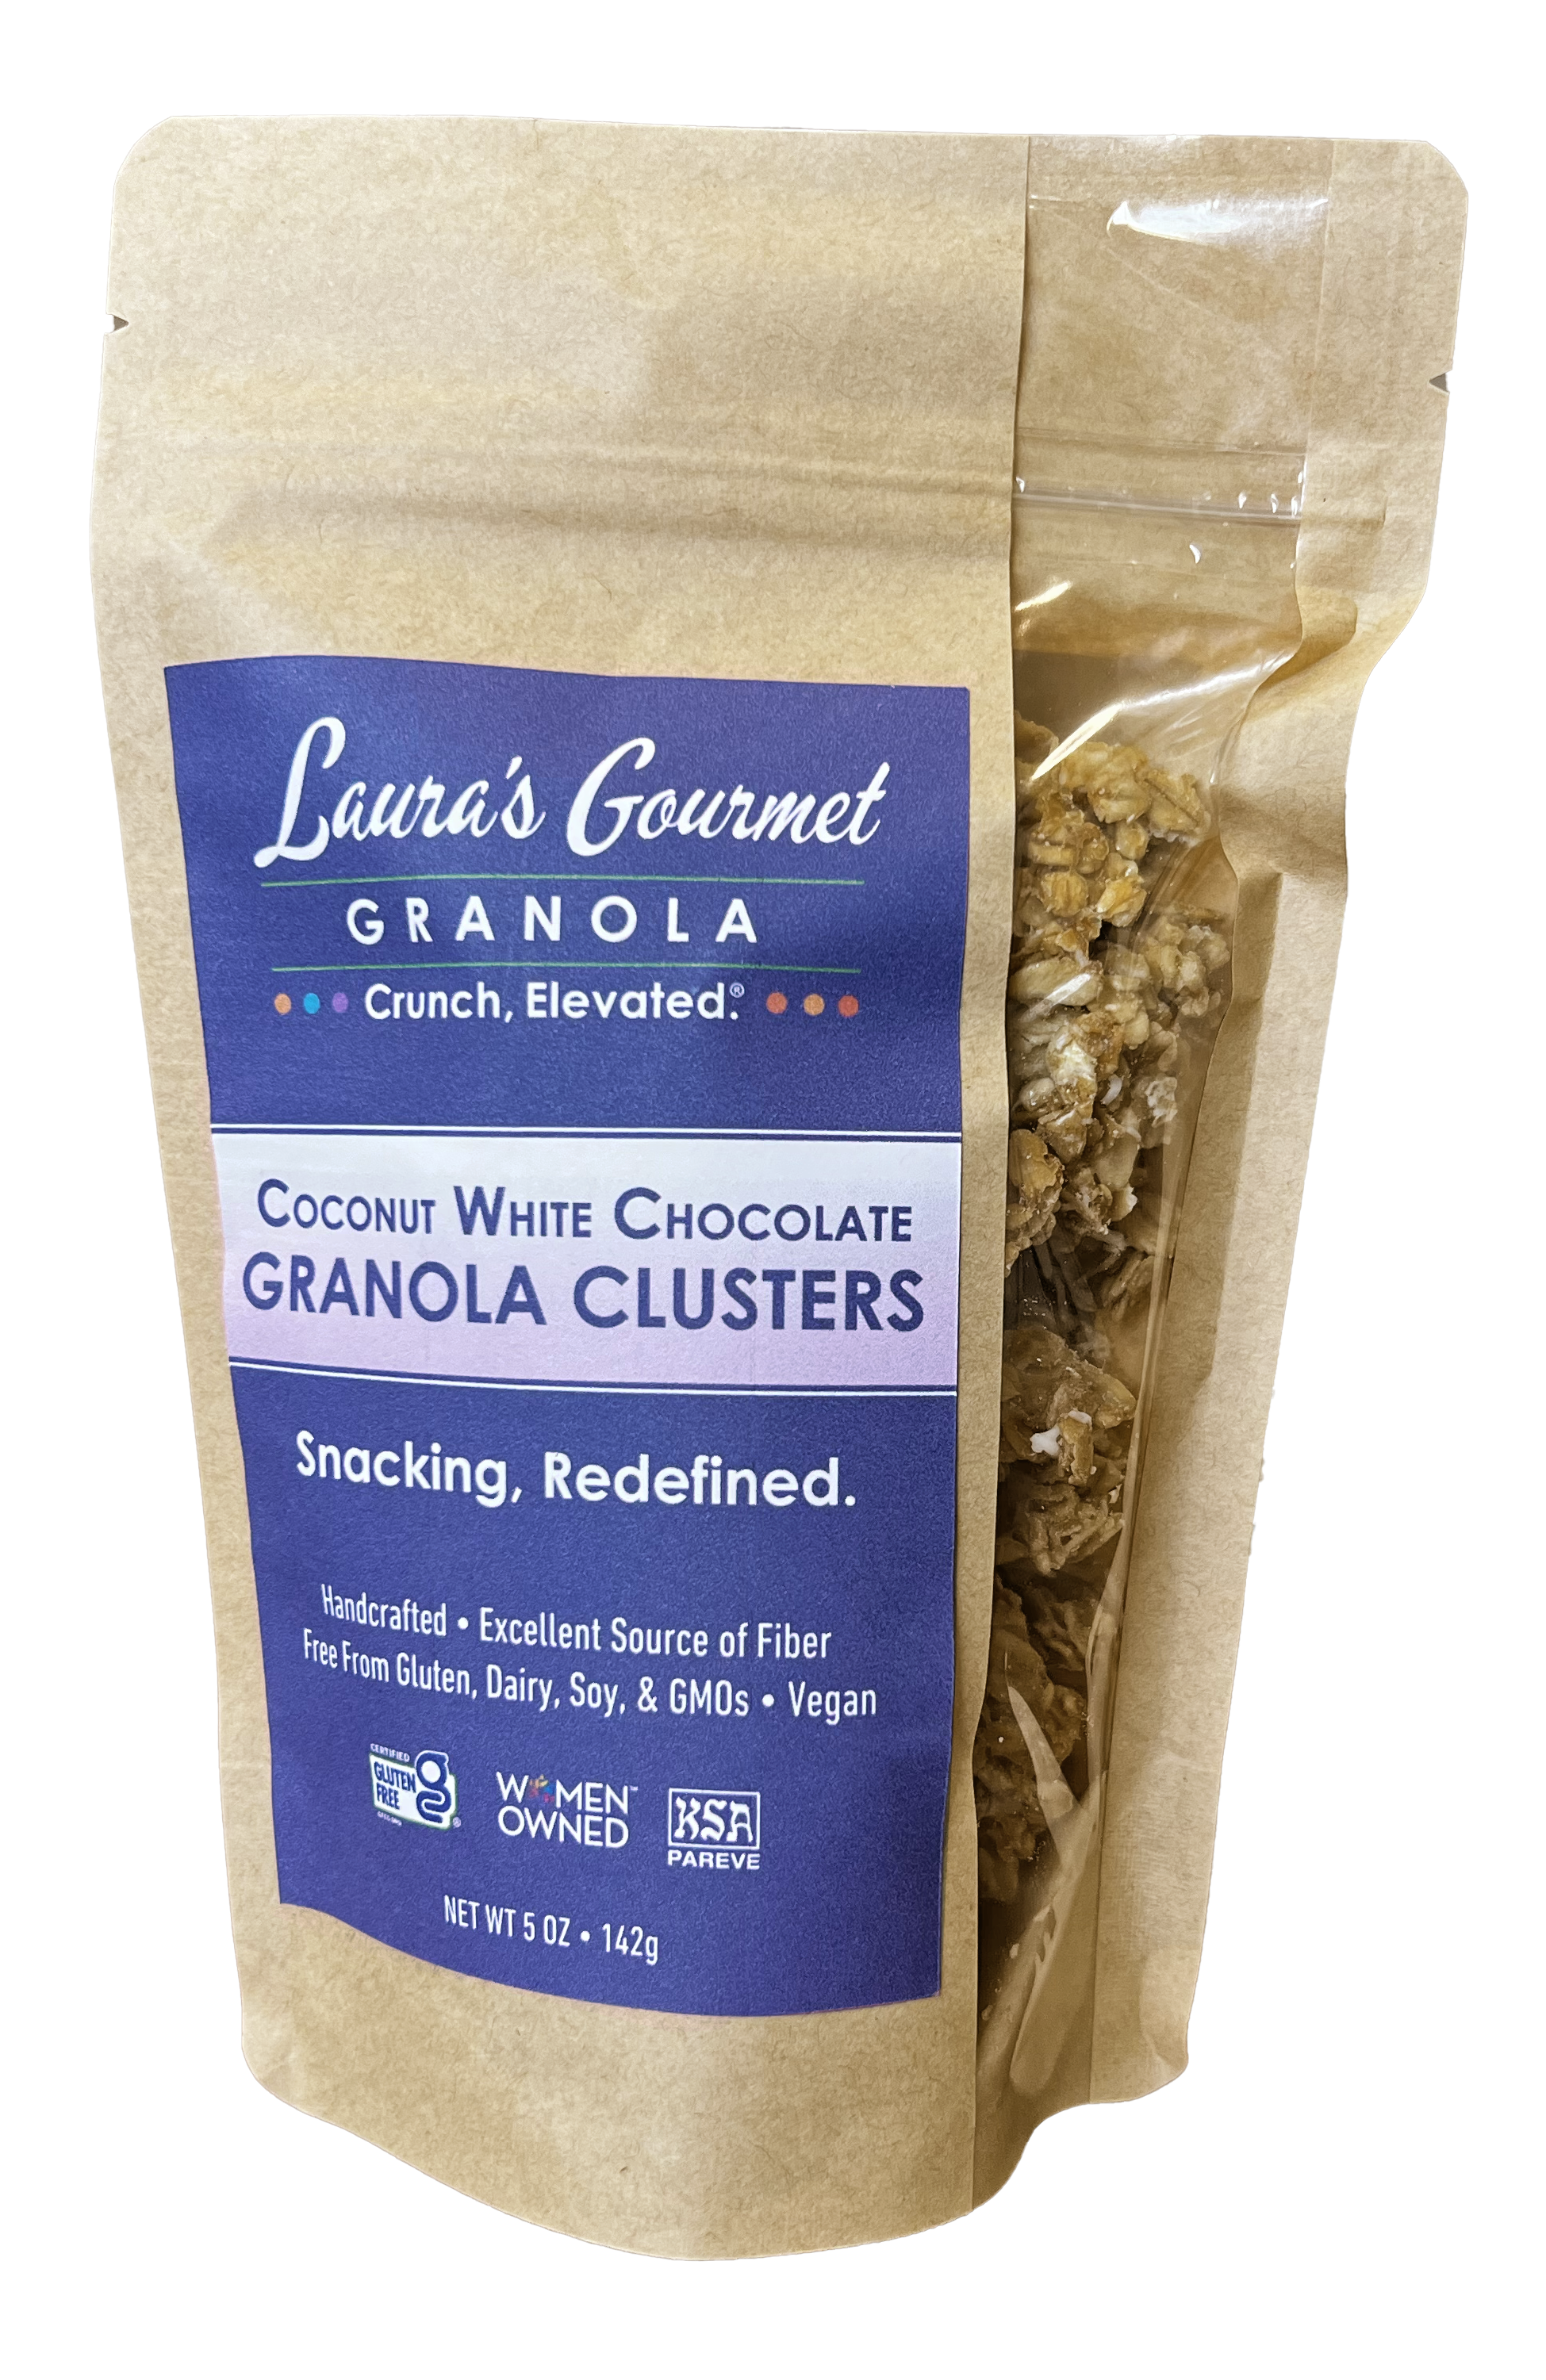 Coconut White Chocolate Granola Clusters